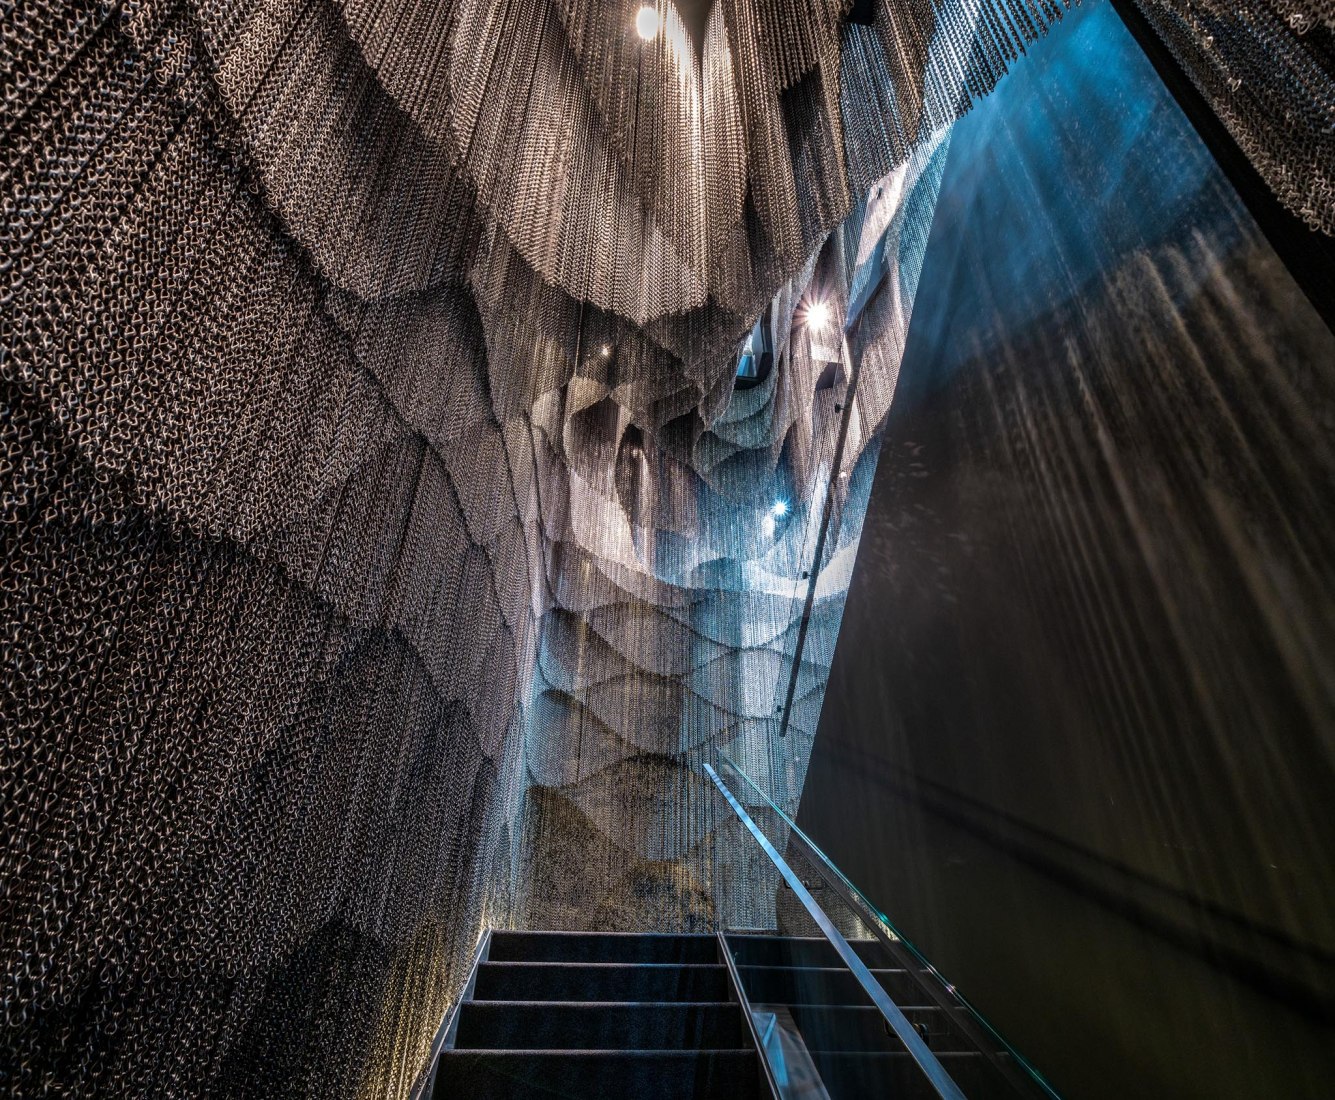 Intervention on the final staircase of Casa Batlló by Kengo Kuma. Image courtesy of Casa Batlló.